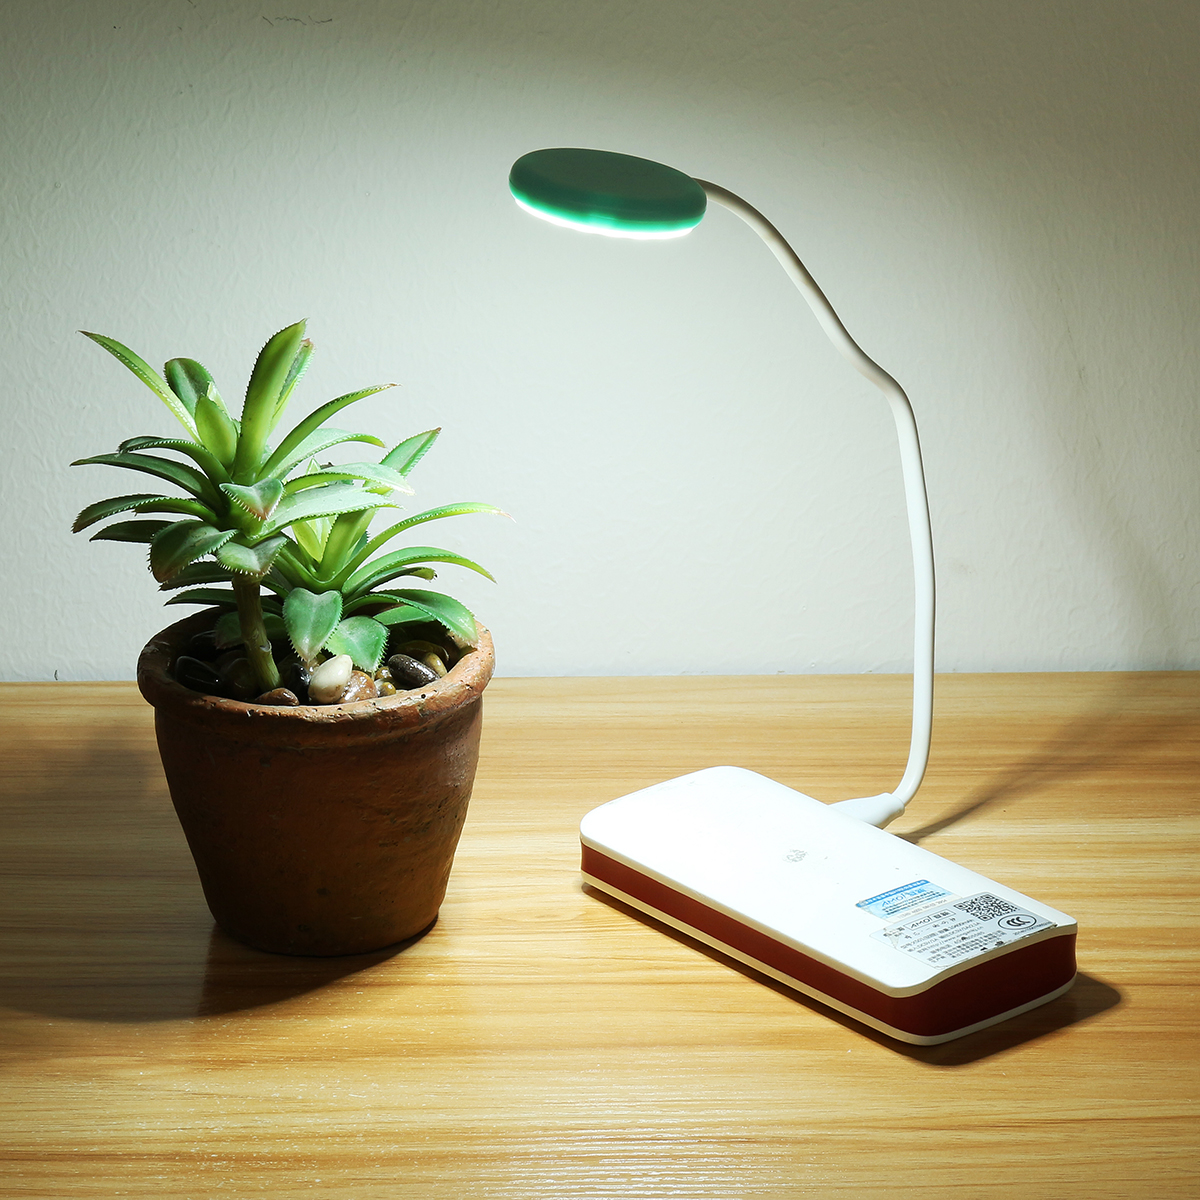 

16 LED USB Гибкая мини Аквариум Fish Tank Light Растение Лампа Письменный стол LED Освещение